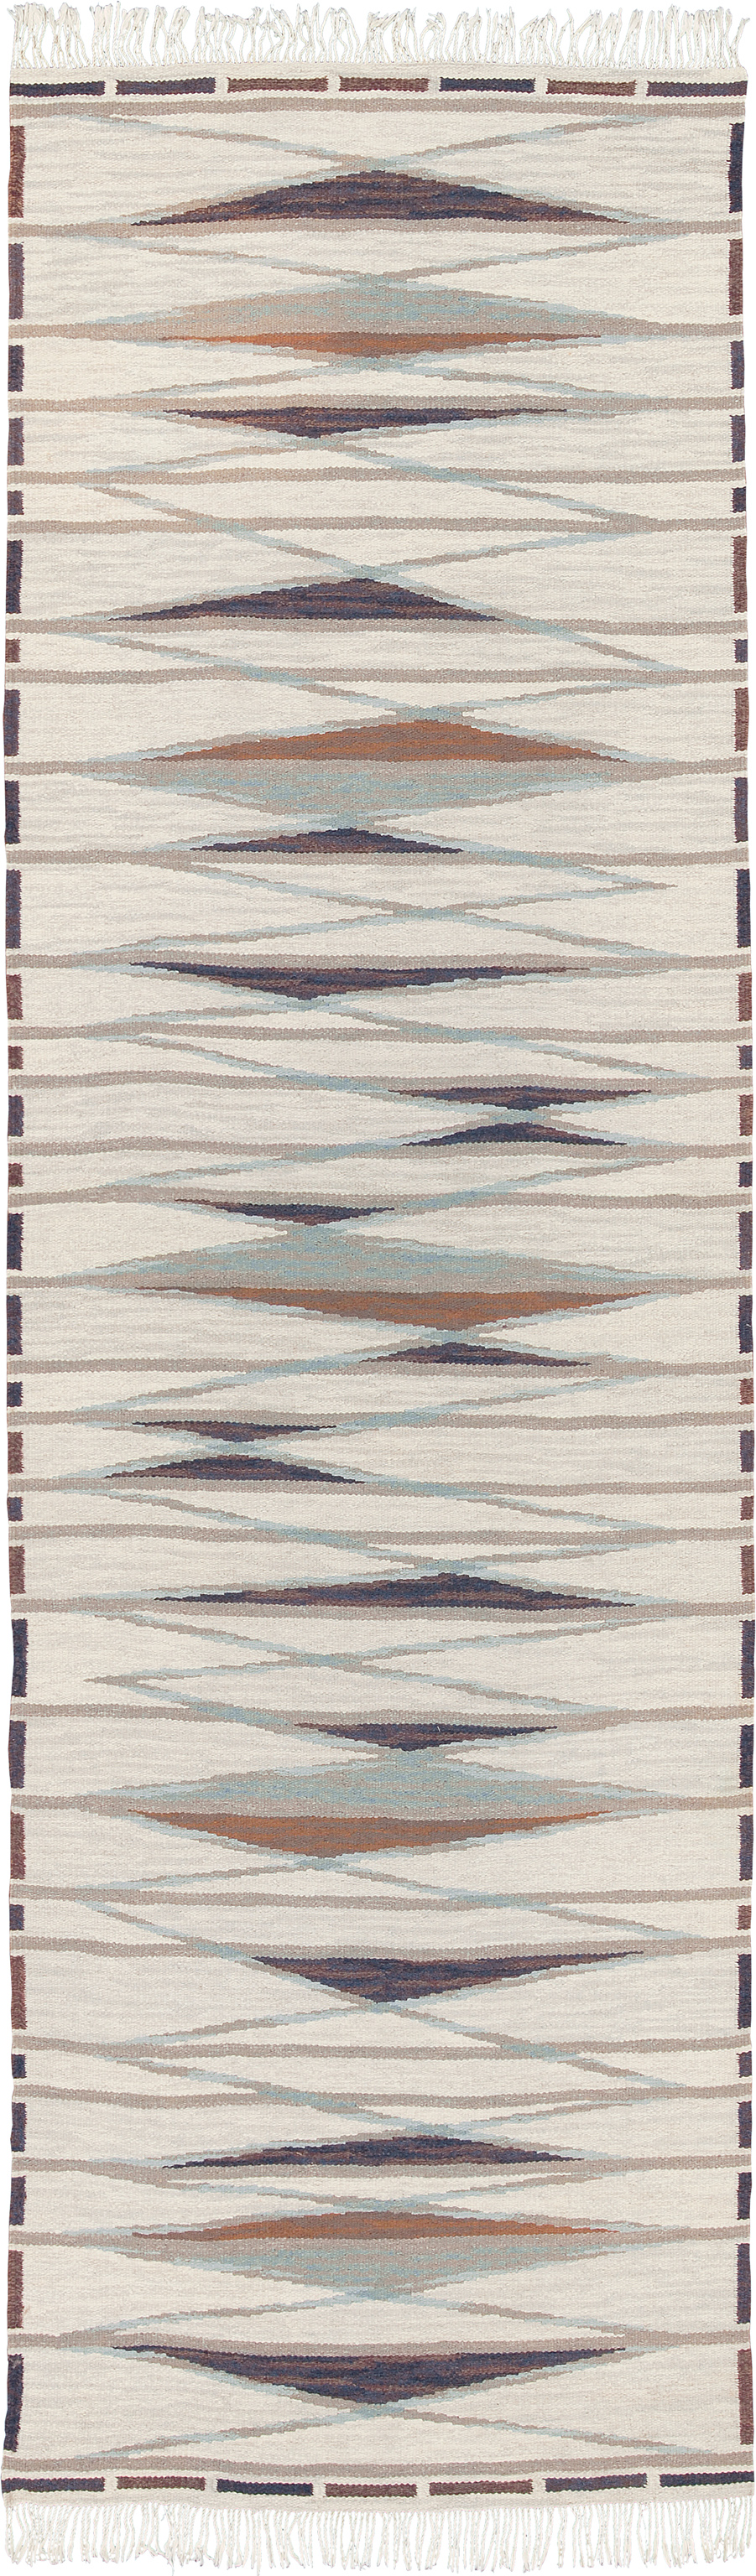 Obtuse Design | Custom Swedish Flat Weave Carpet | FJ Hakimian | Carpet Gallery in NY